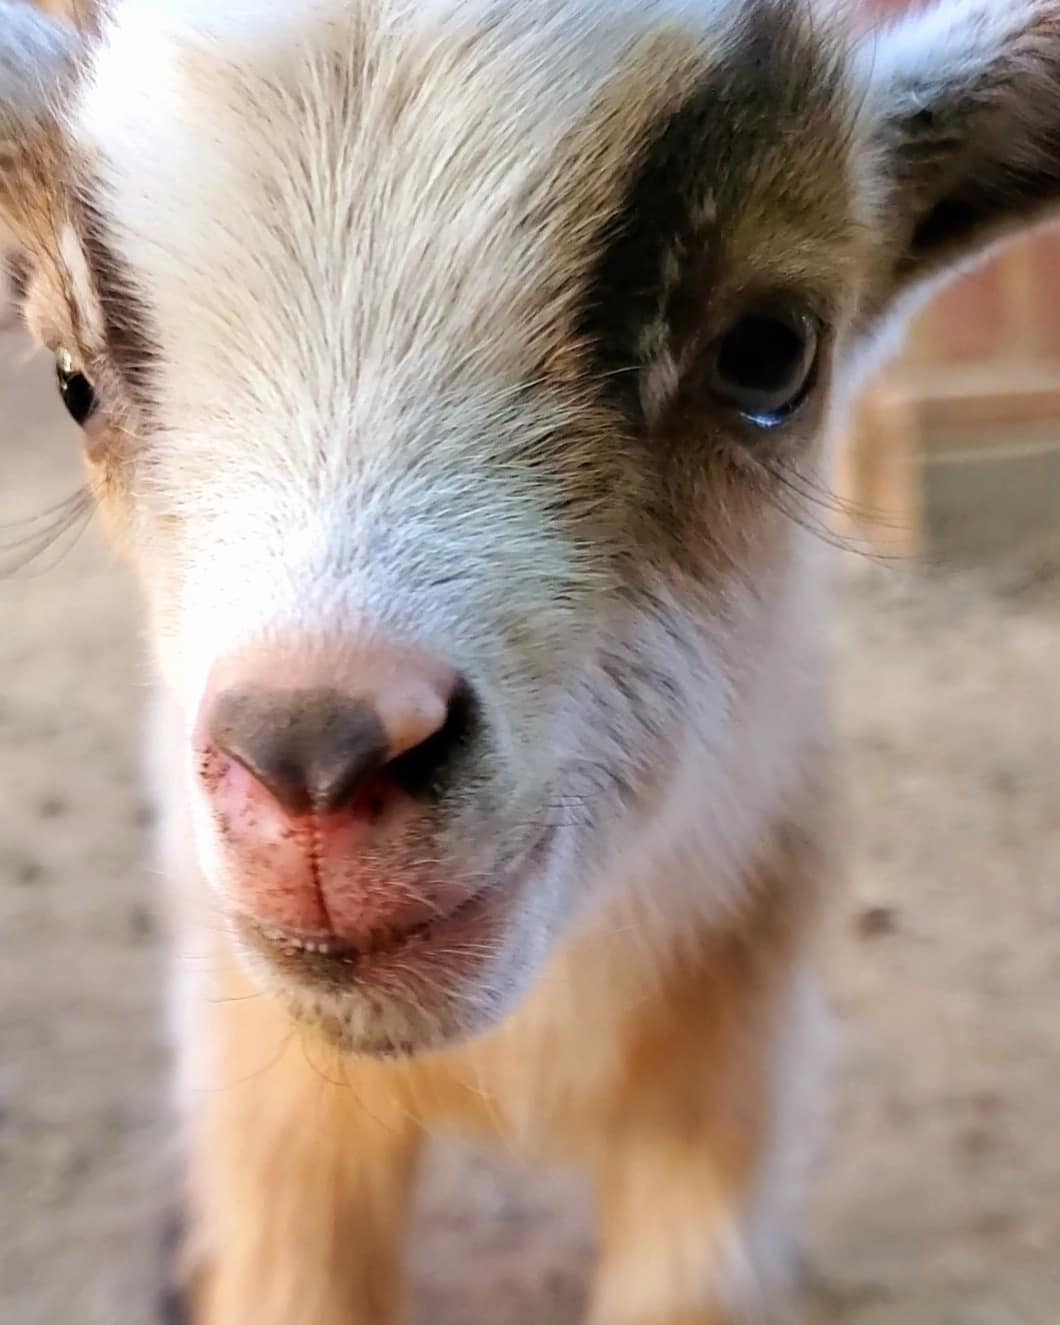 Goat close up photo